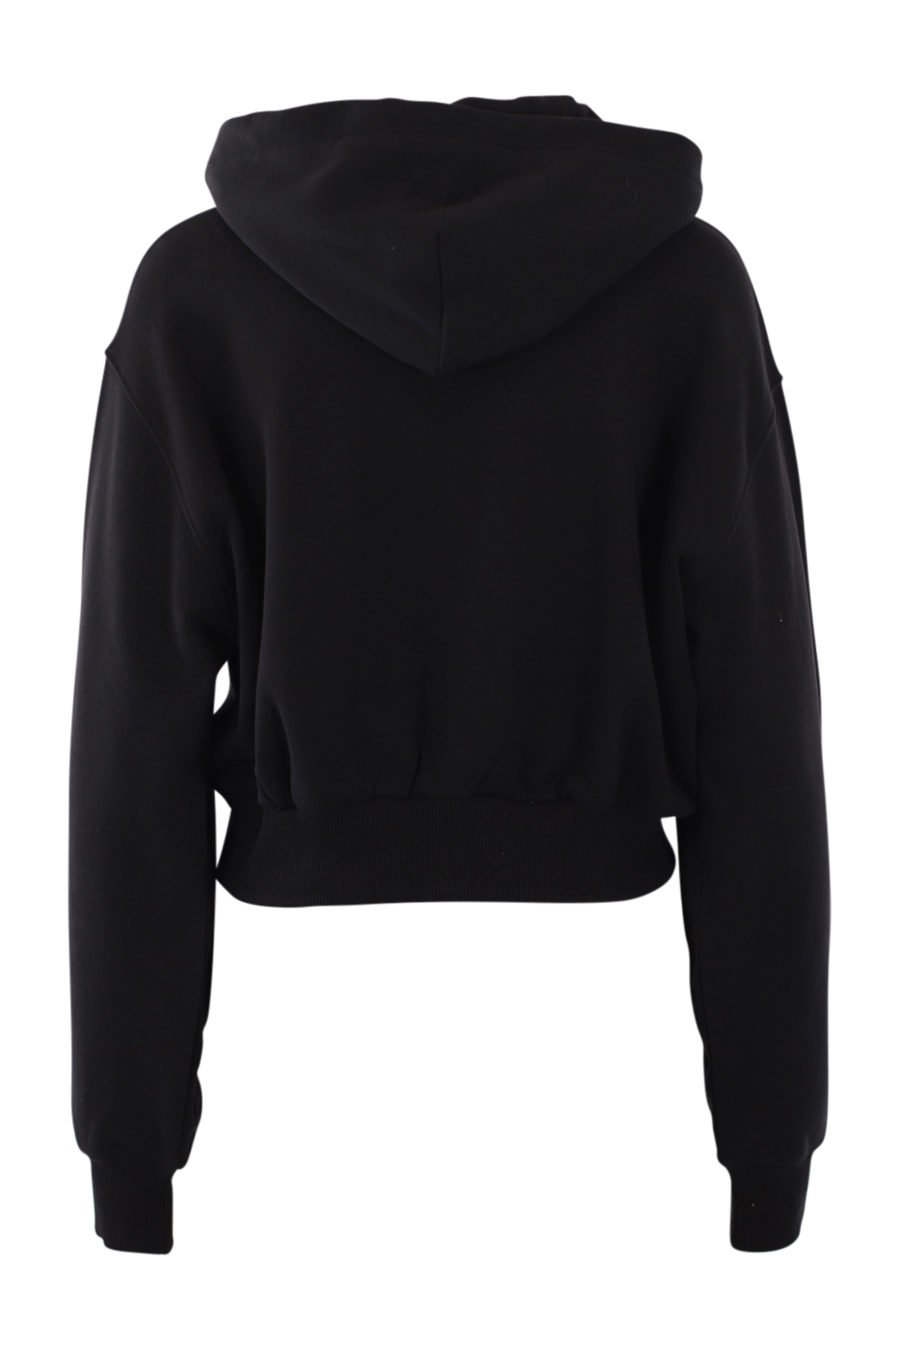 Schwarzes Sweatshirt mit Kapuze und lila-rotem Logo - IMG 0882